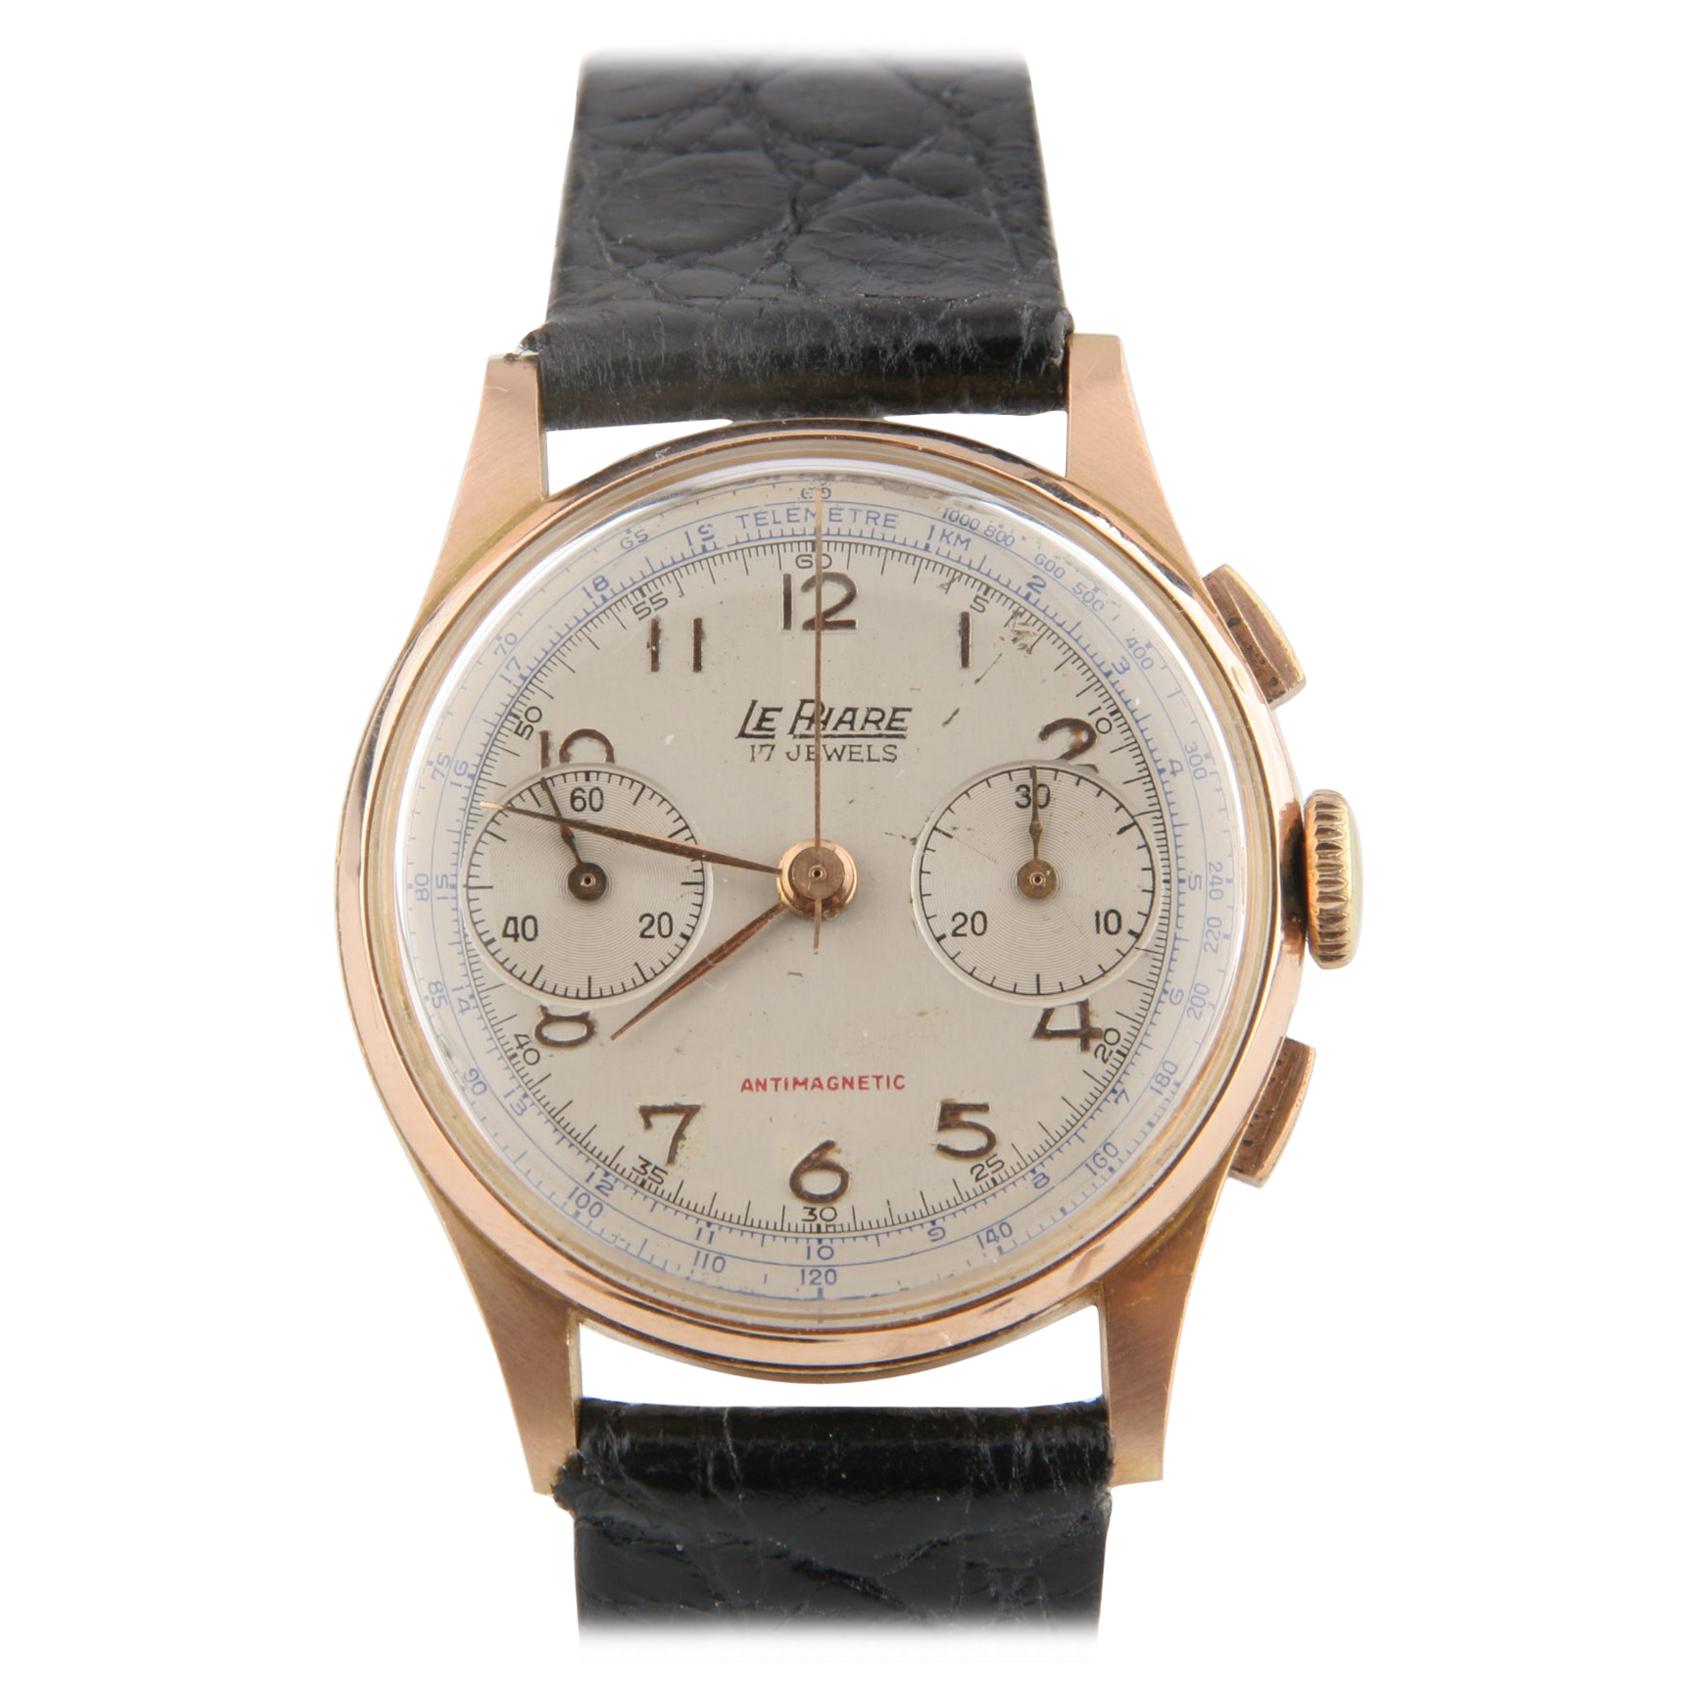 La Phare 18K Rose Gold Herren Handaufzug Chronograph 17 Jewel Uhr Lederband